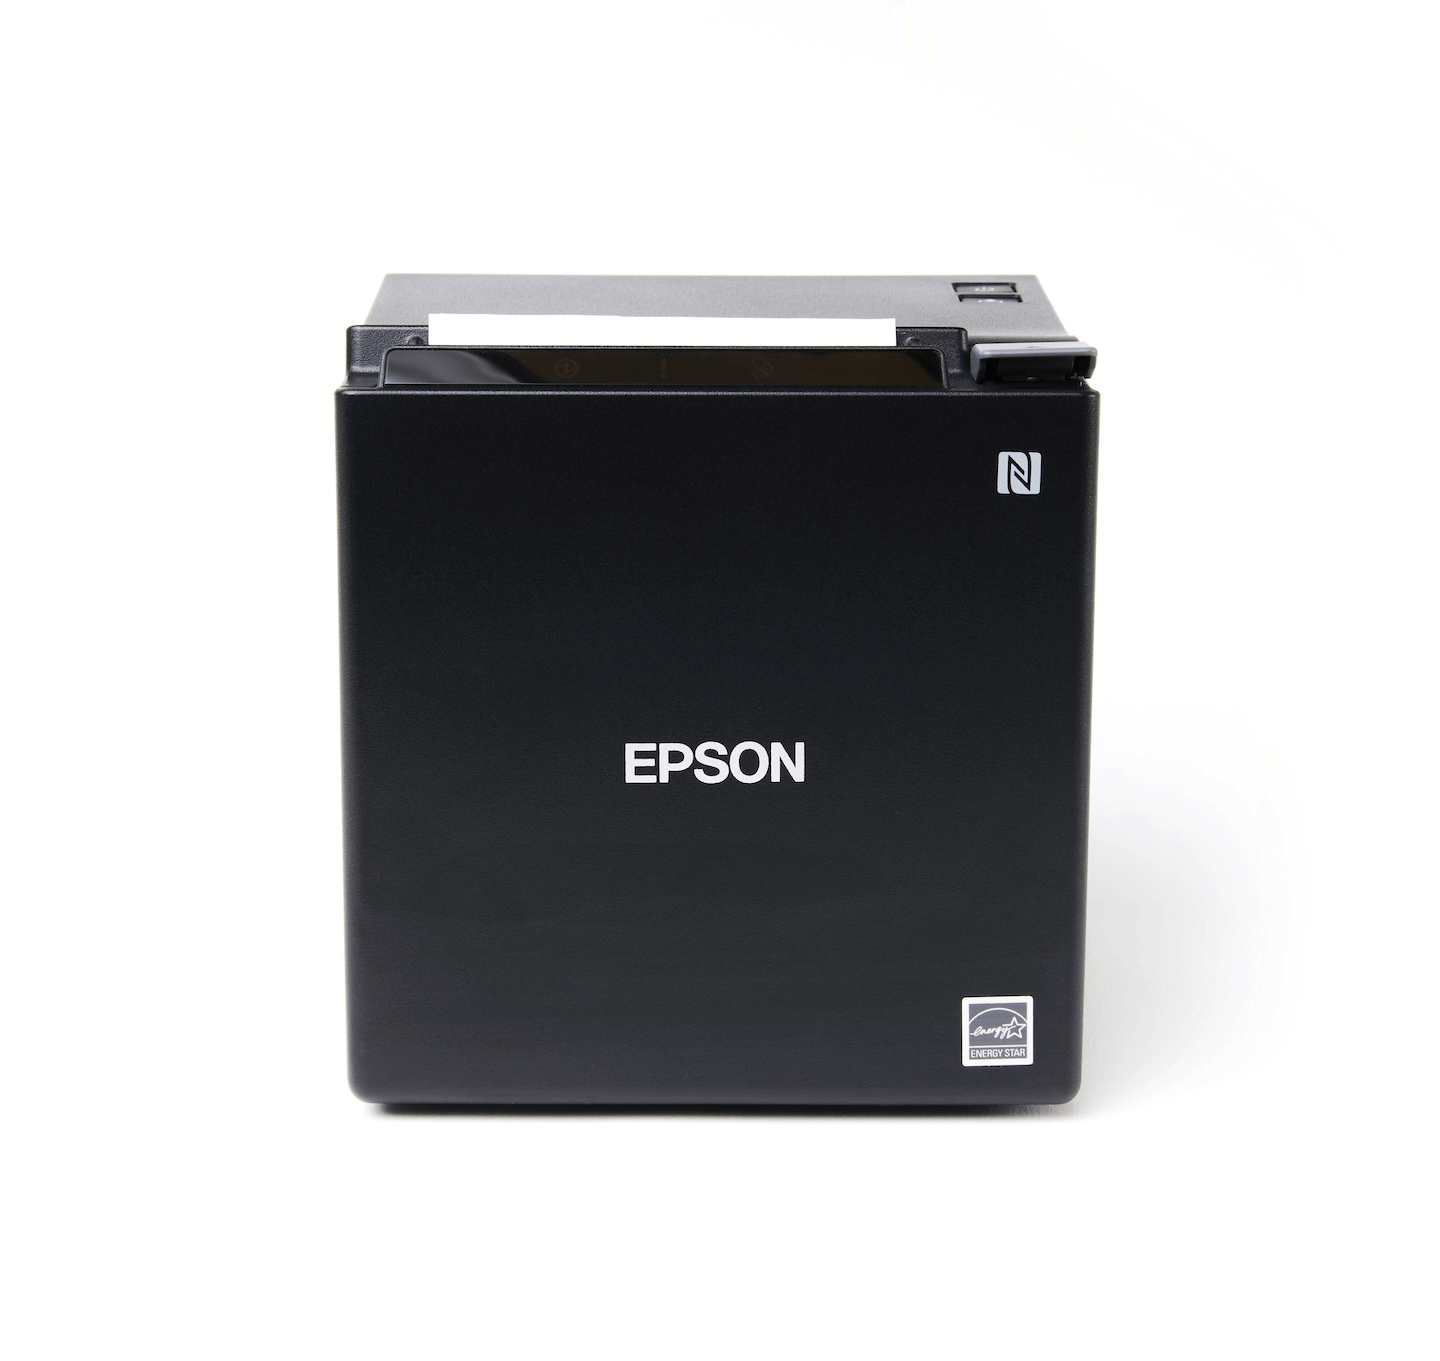 Front view of Epson TM-m10 printer.